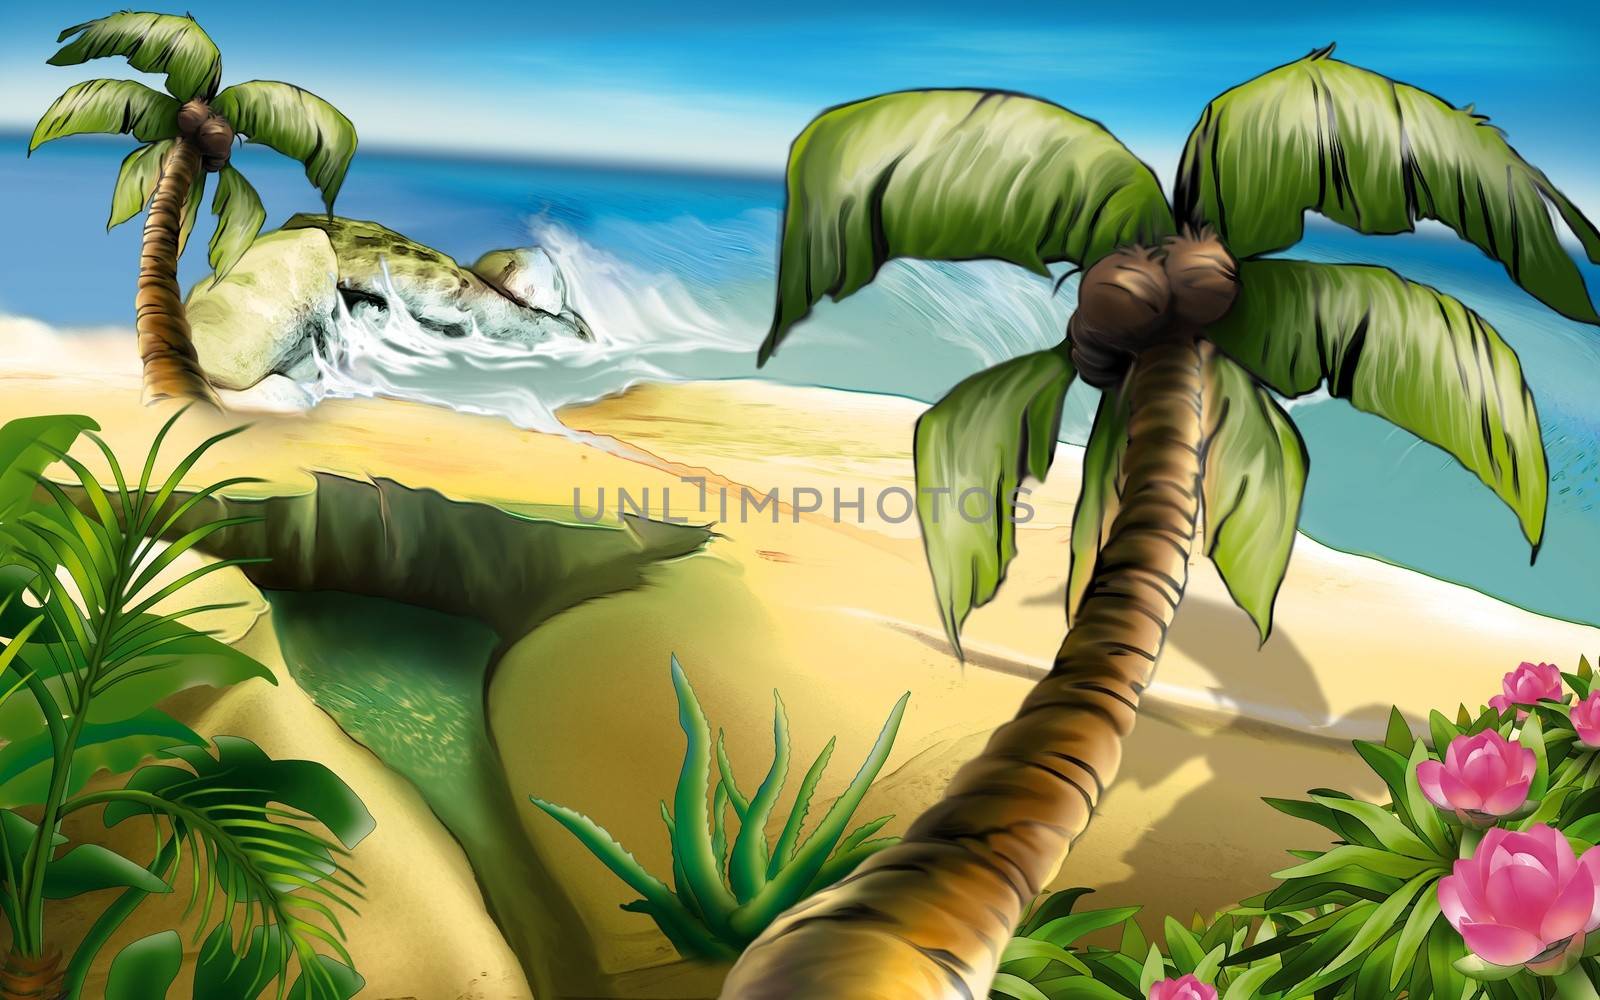 Island Of Dreams by illustratorCZ